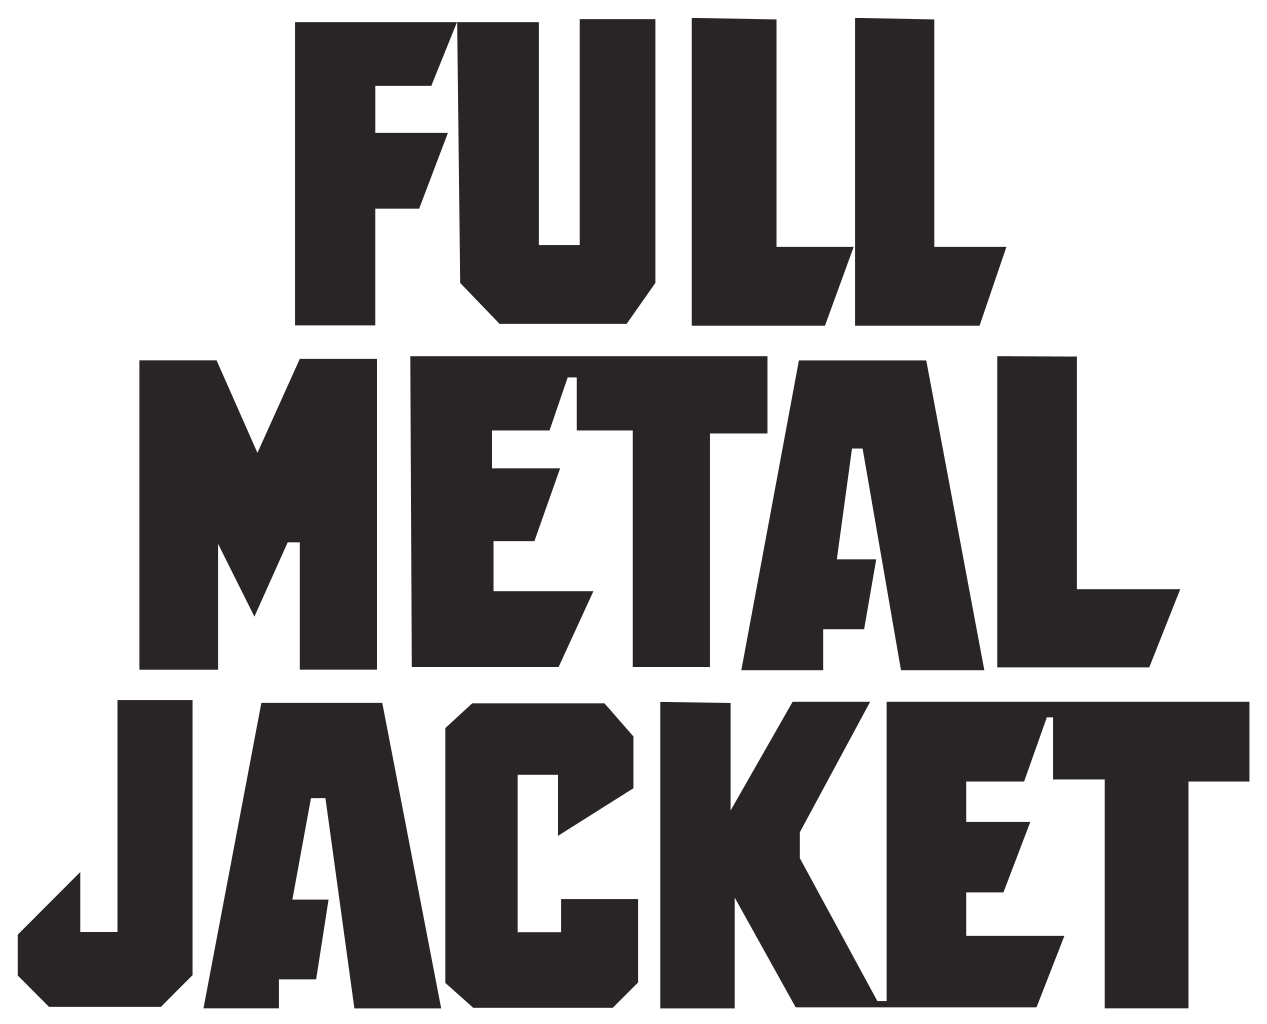 Full Logo - Fullmetaljacket Logo.svg